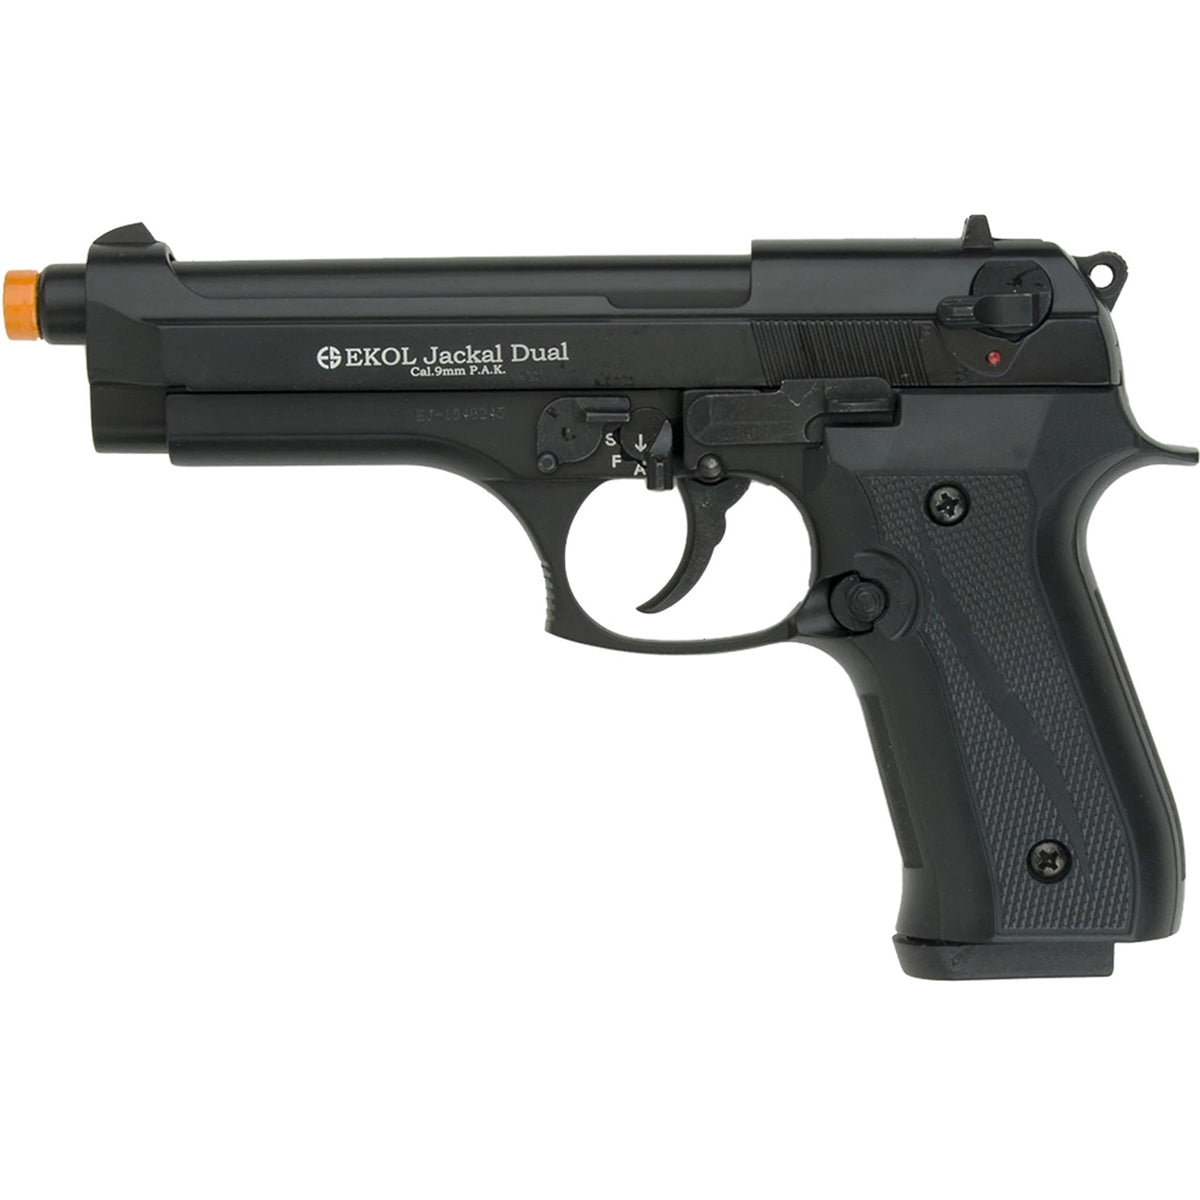 Blank-Firing Pistol - Jackal Dual Magnum - Full Automatic - Front-Firing 9mm PAK - Black Finish